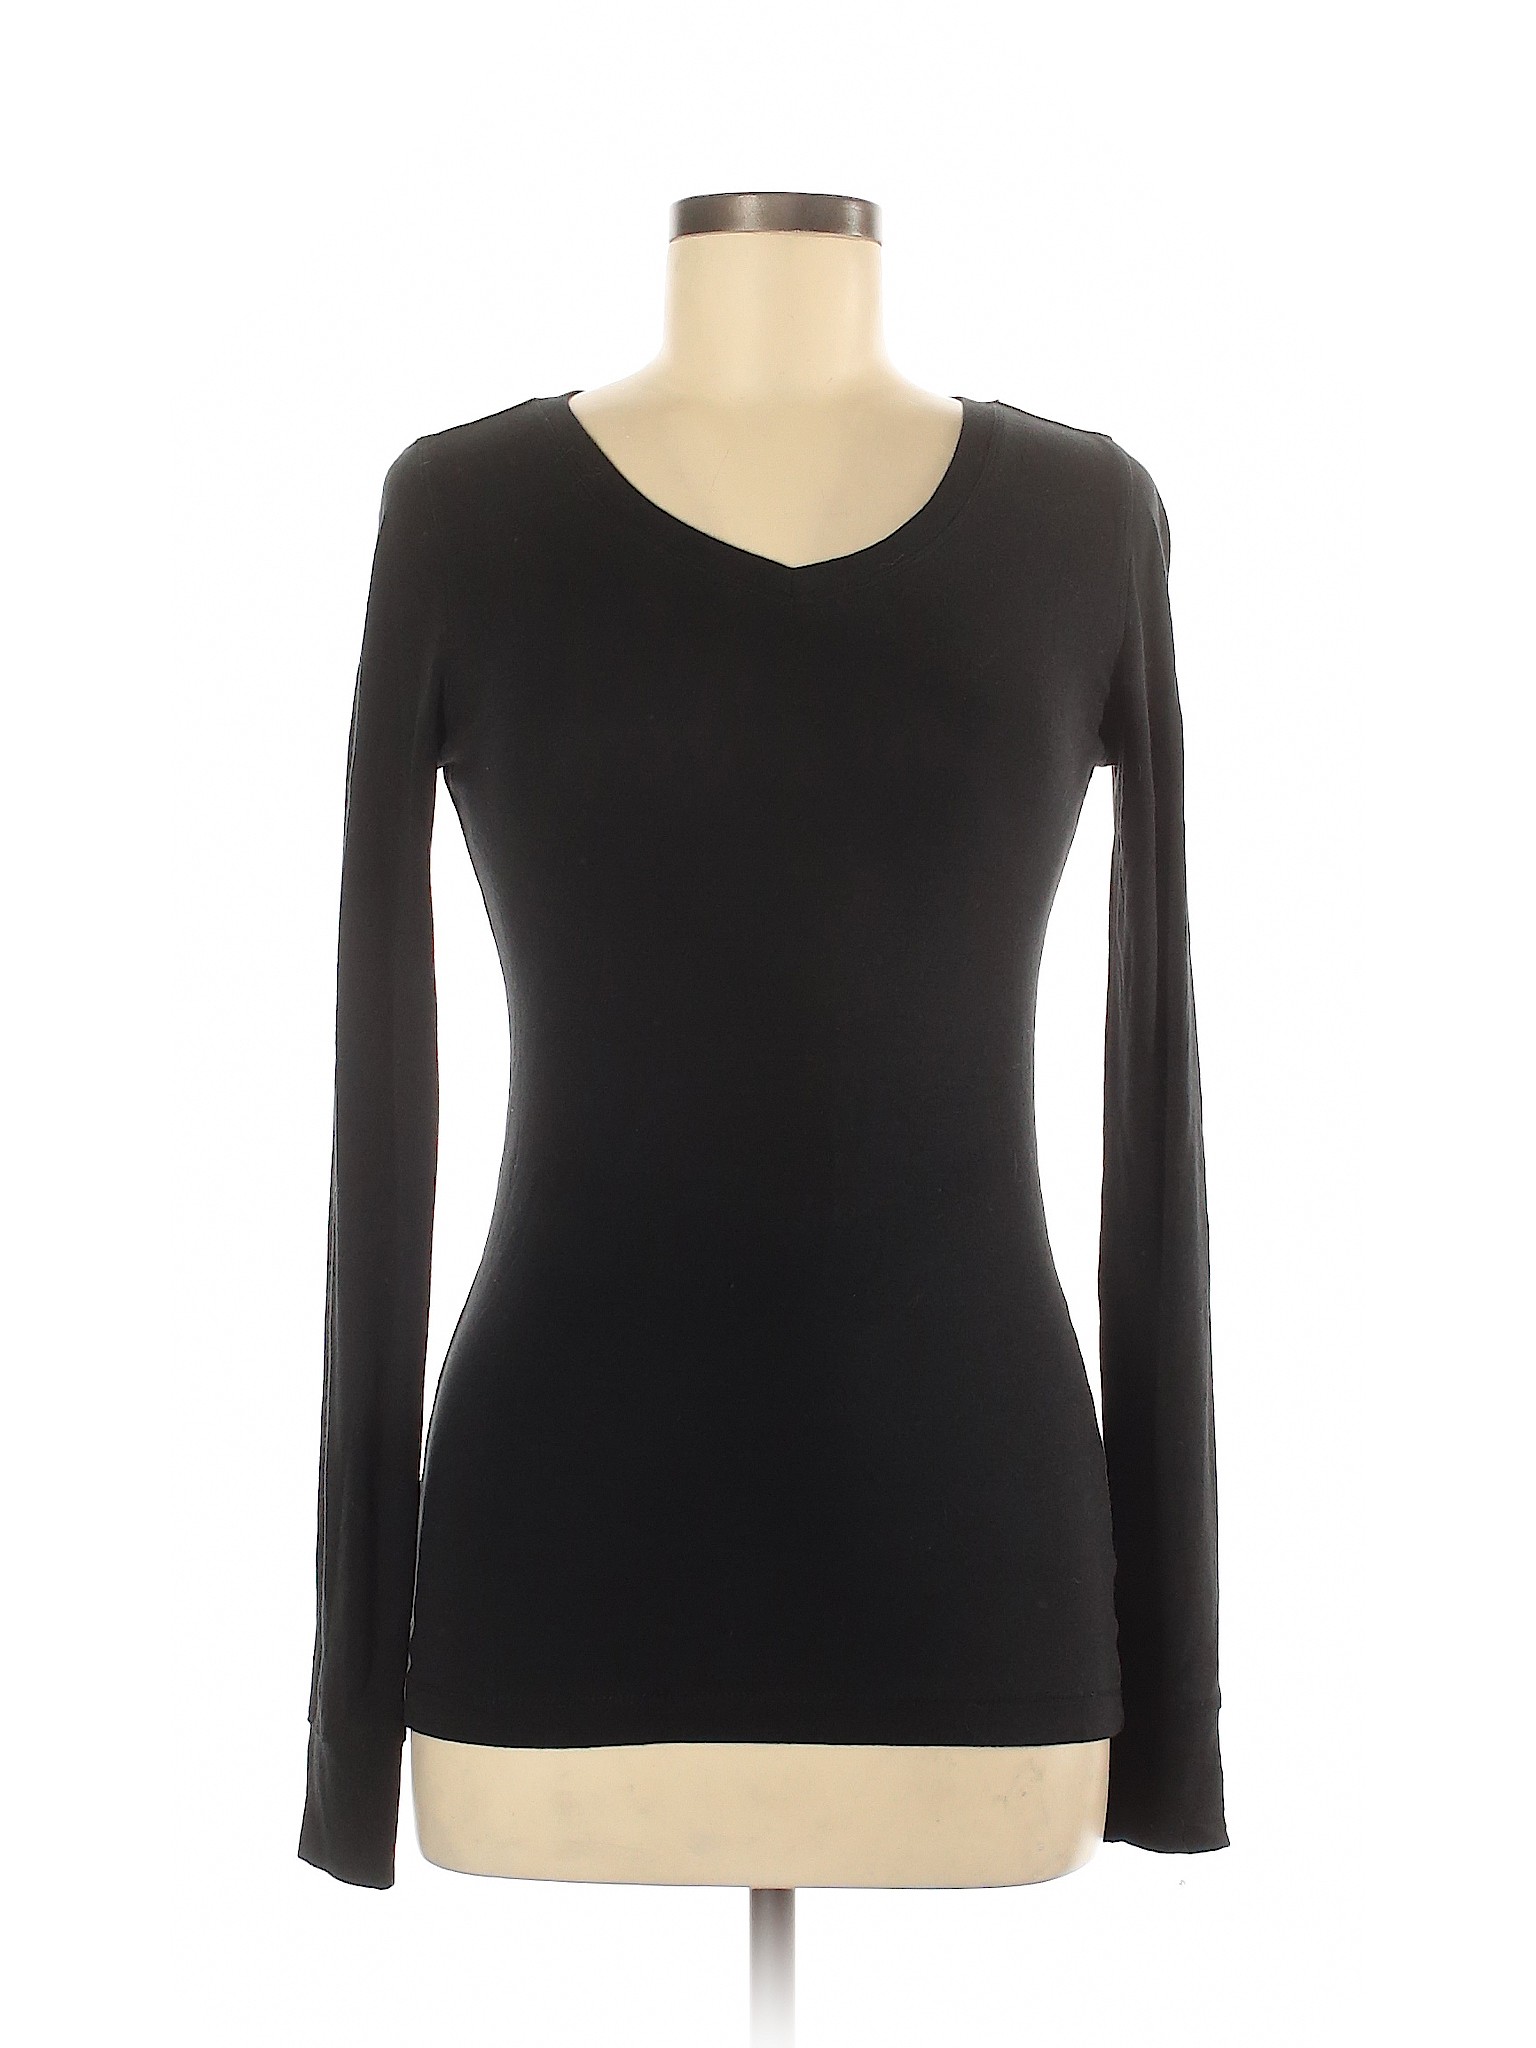 Carole Little Women Black Long Sleeve T-Shirt M | eBay